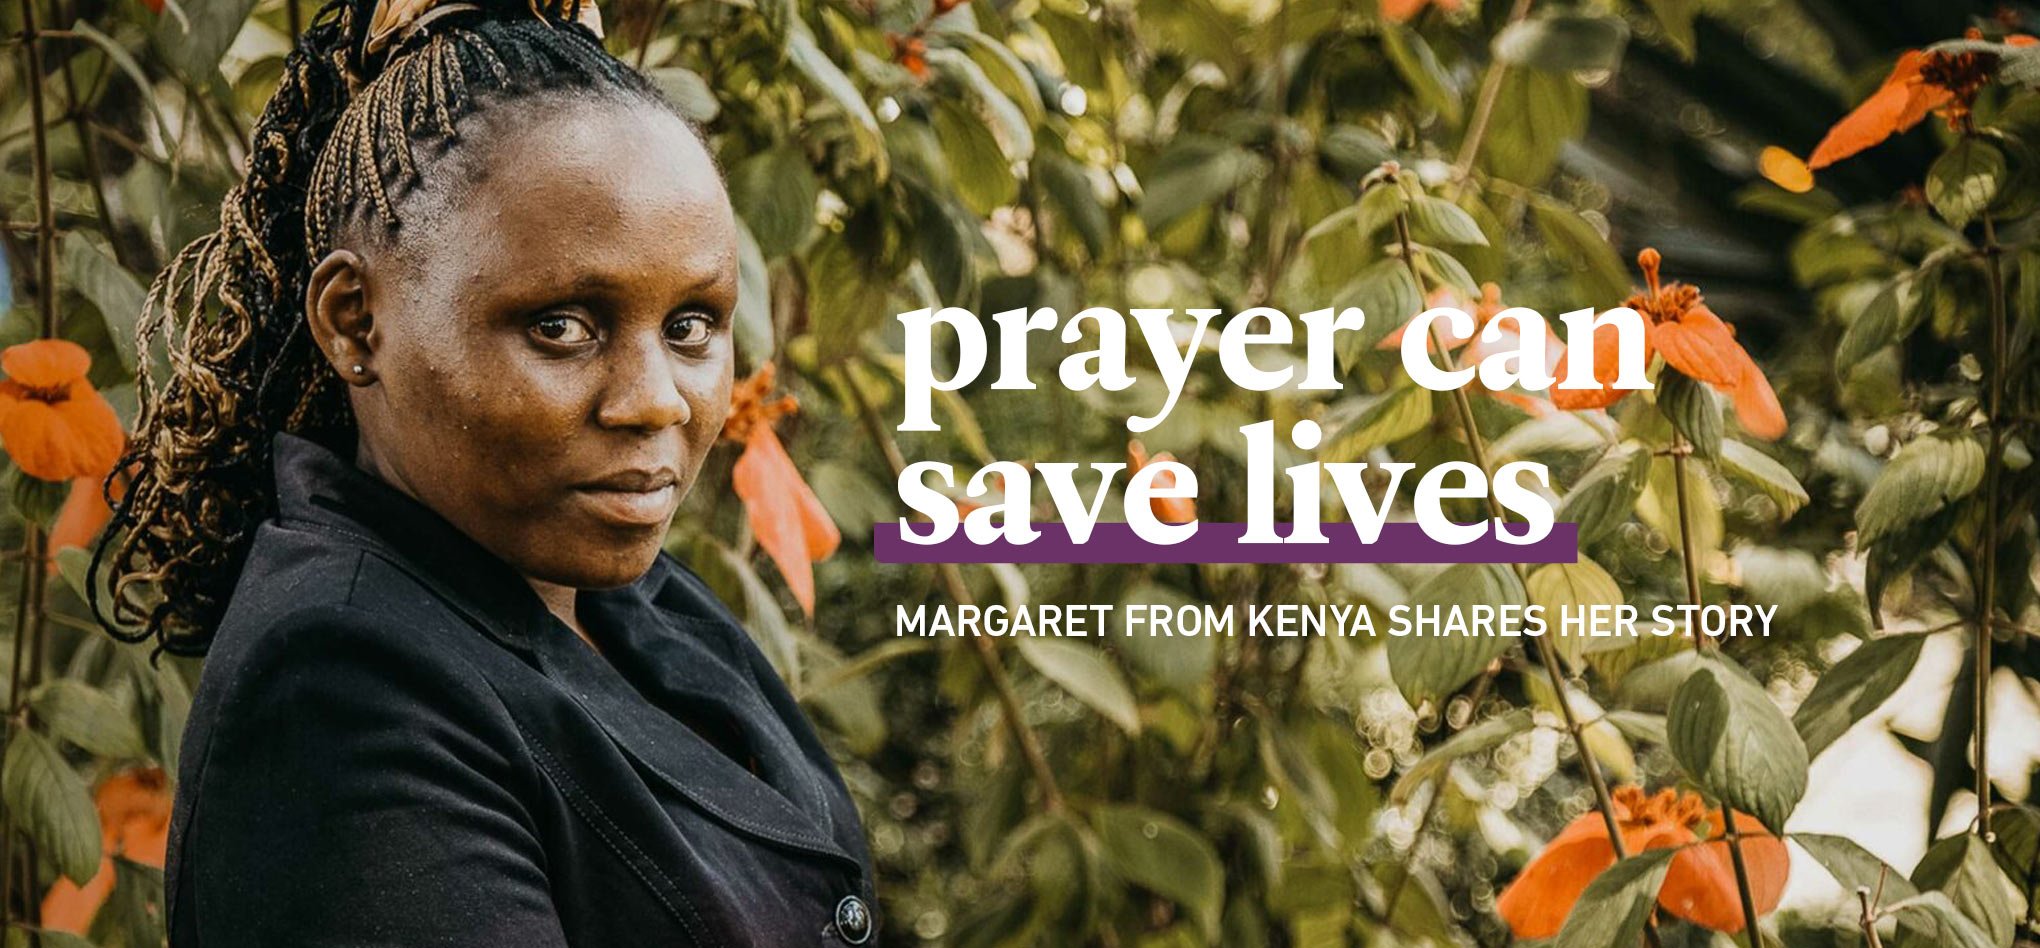 “We can save lives through prayer”